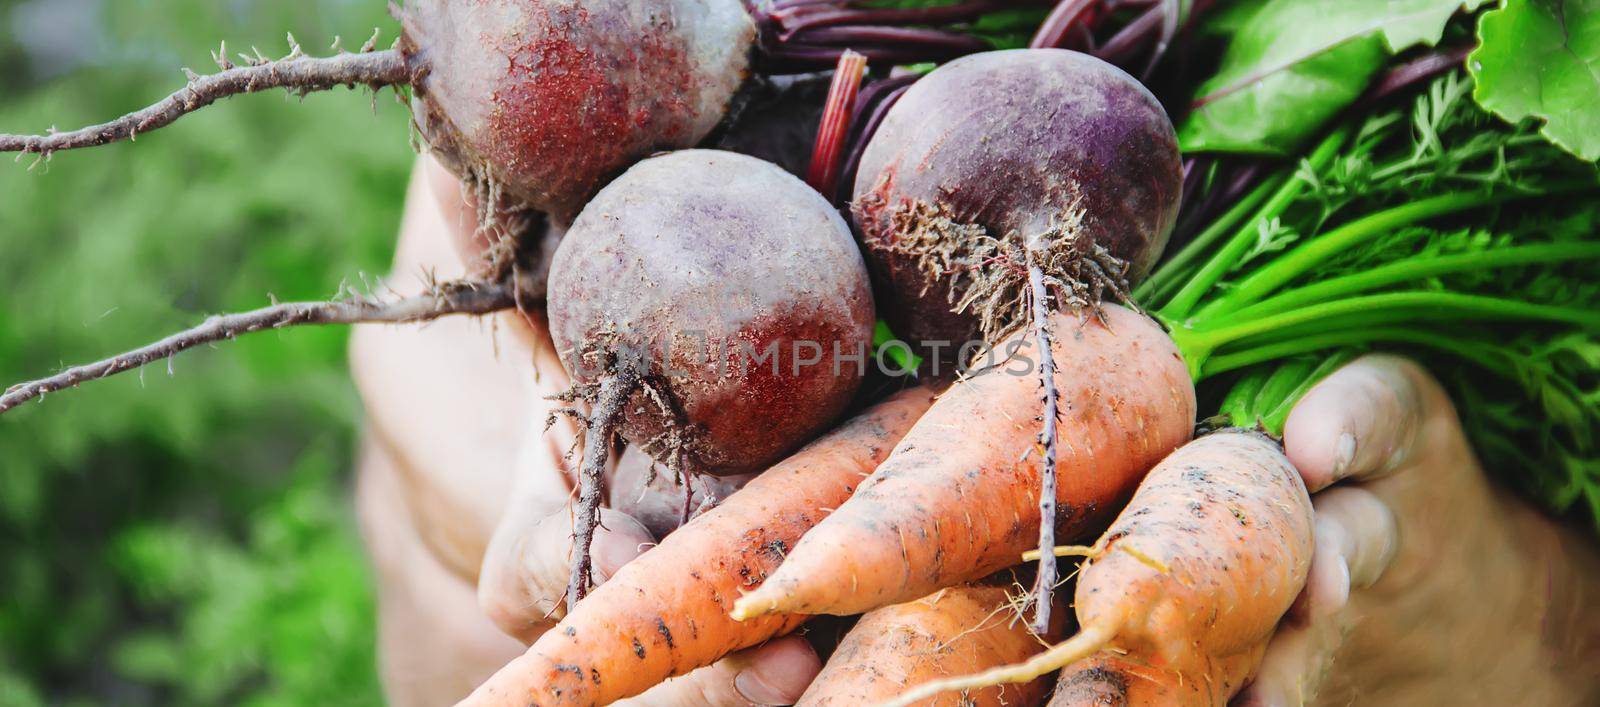 organic homemade vegetables in the hands of men. by yanadjana